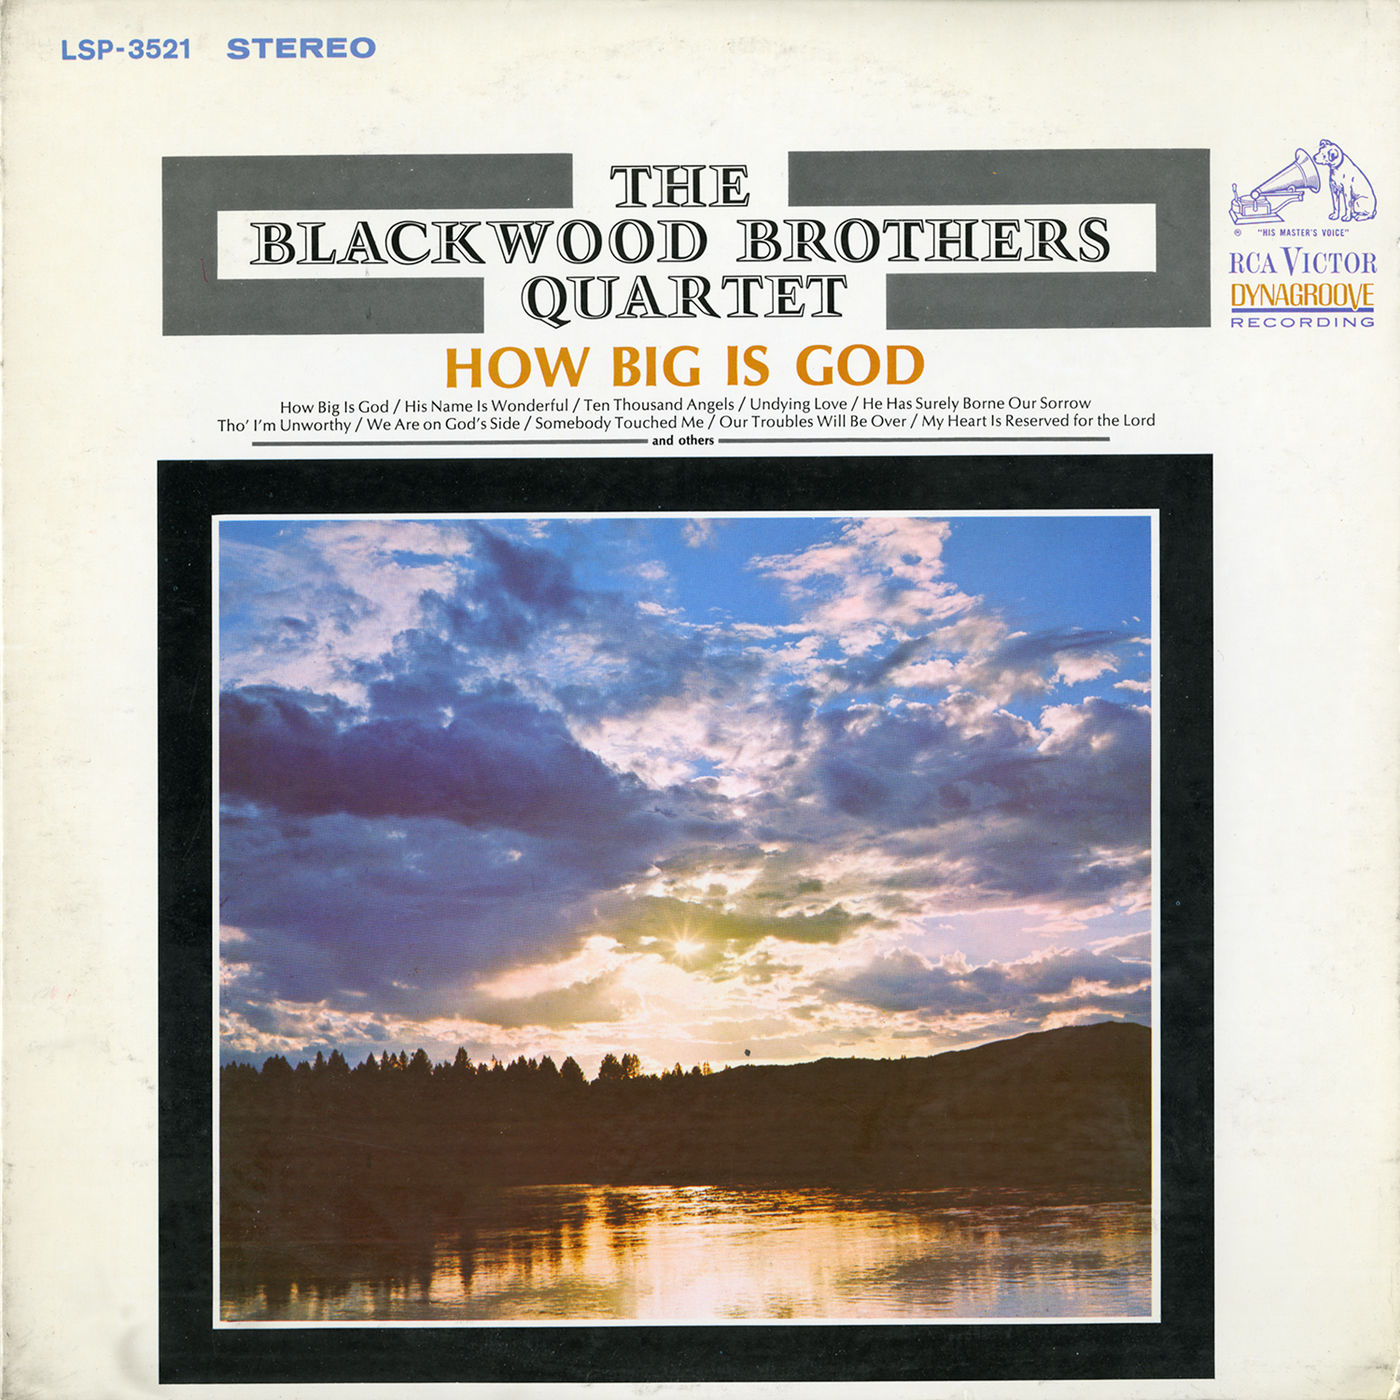 The Blackwood Brothers Quartet – How Big Is God